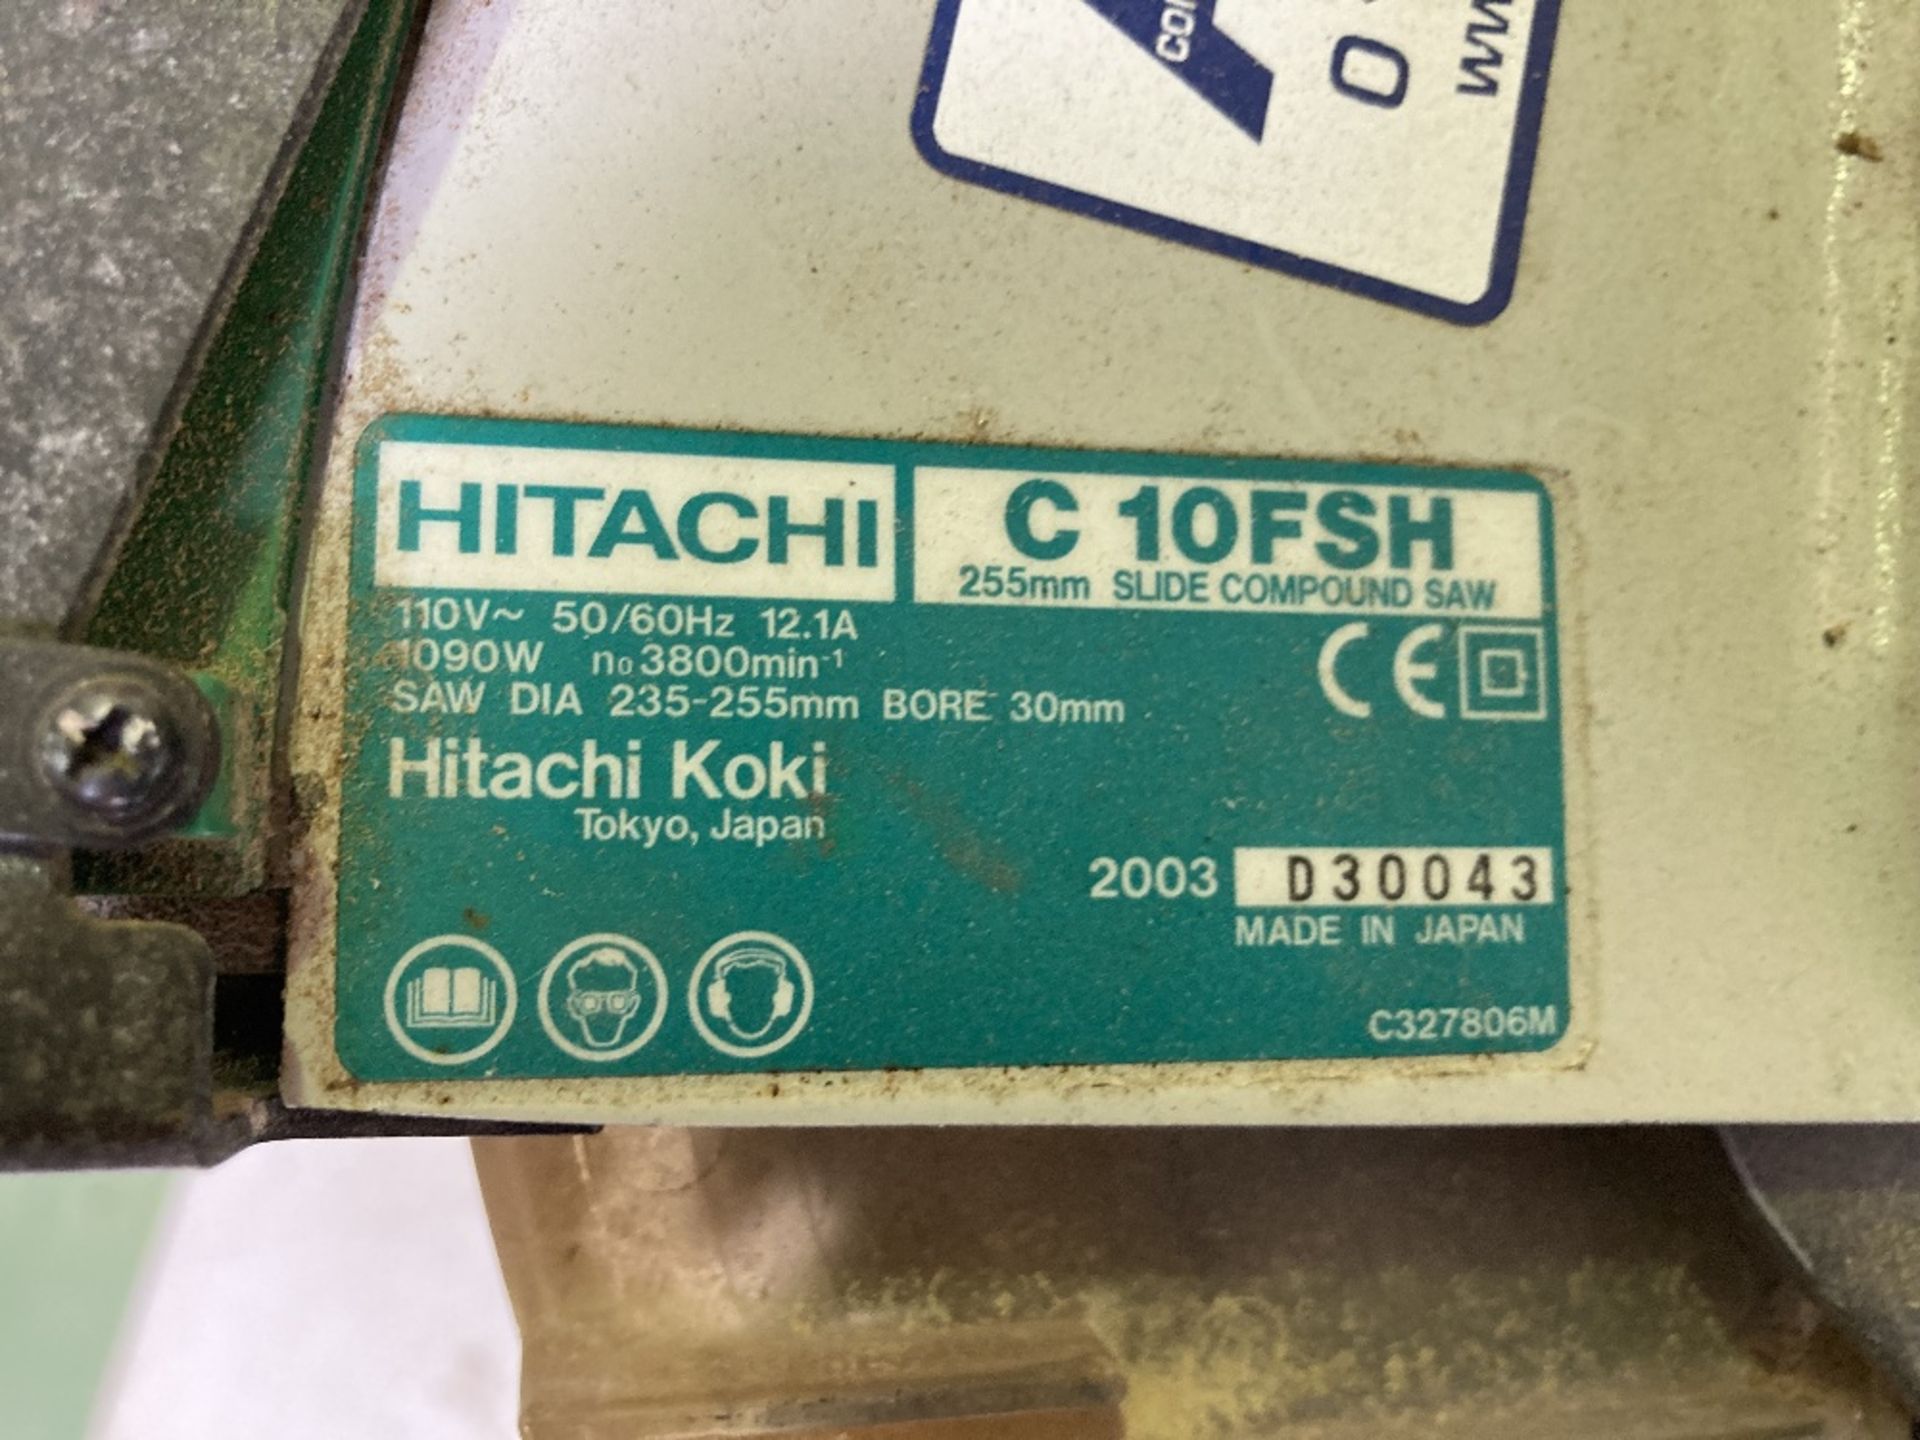 Hitachi C10FSH Compound Mitre Saw - Image 3 of 3